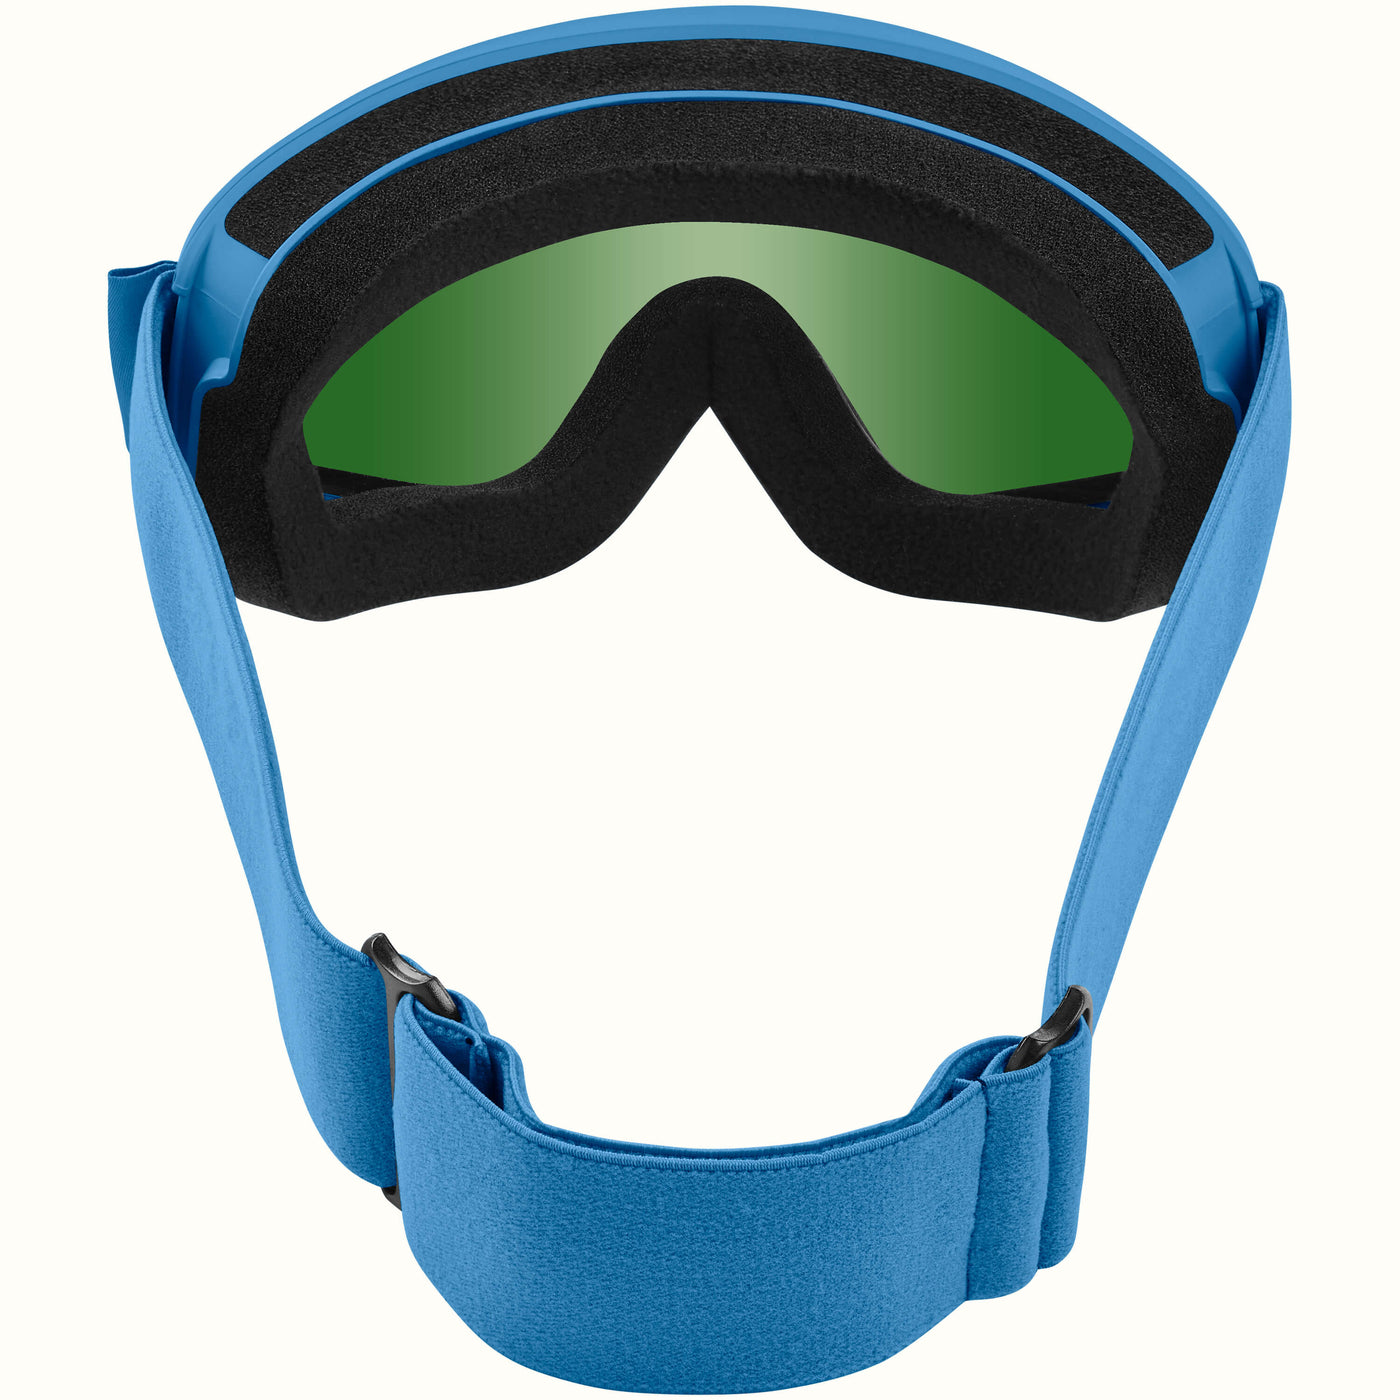 Dipper Kids' Ski & Snowboard Goggles | Matte Brash Blue and Peridot